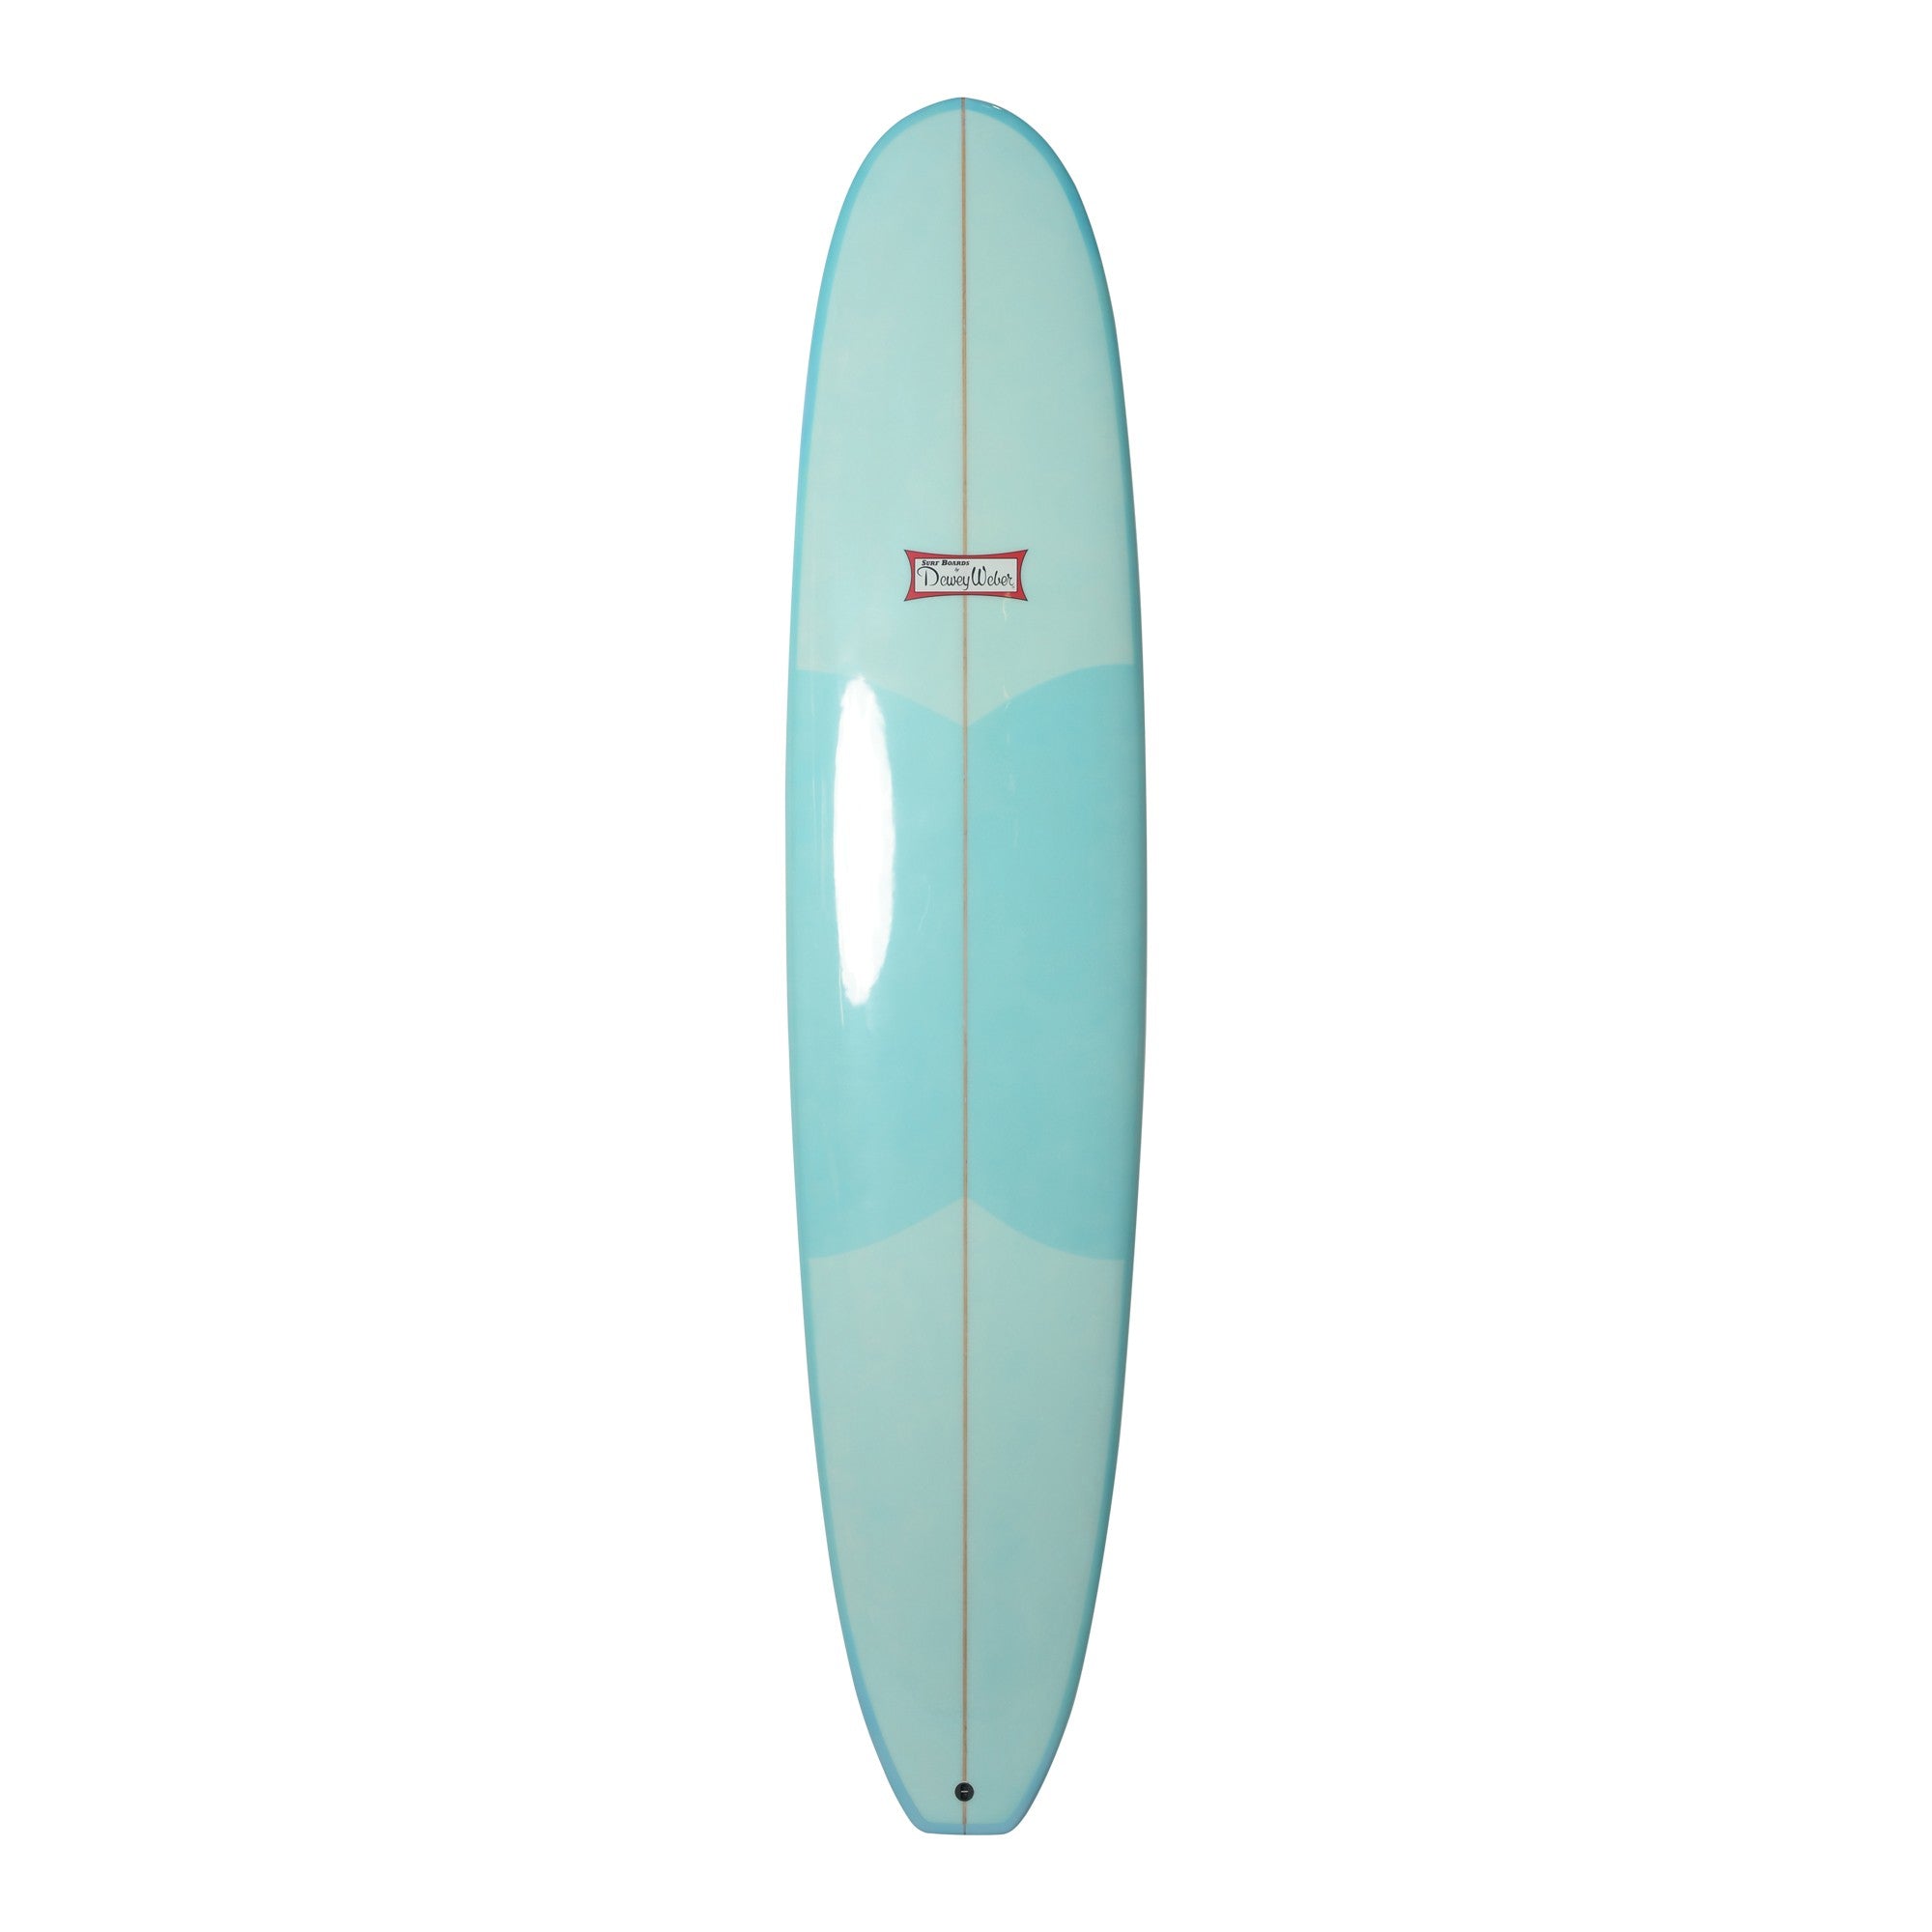 WEBER SURFBOARDS - Quantum 8'2 - Blue